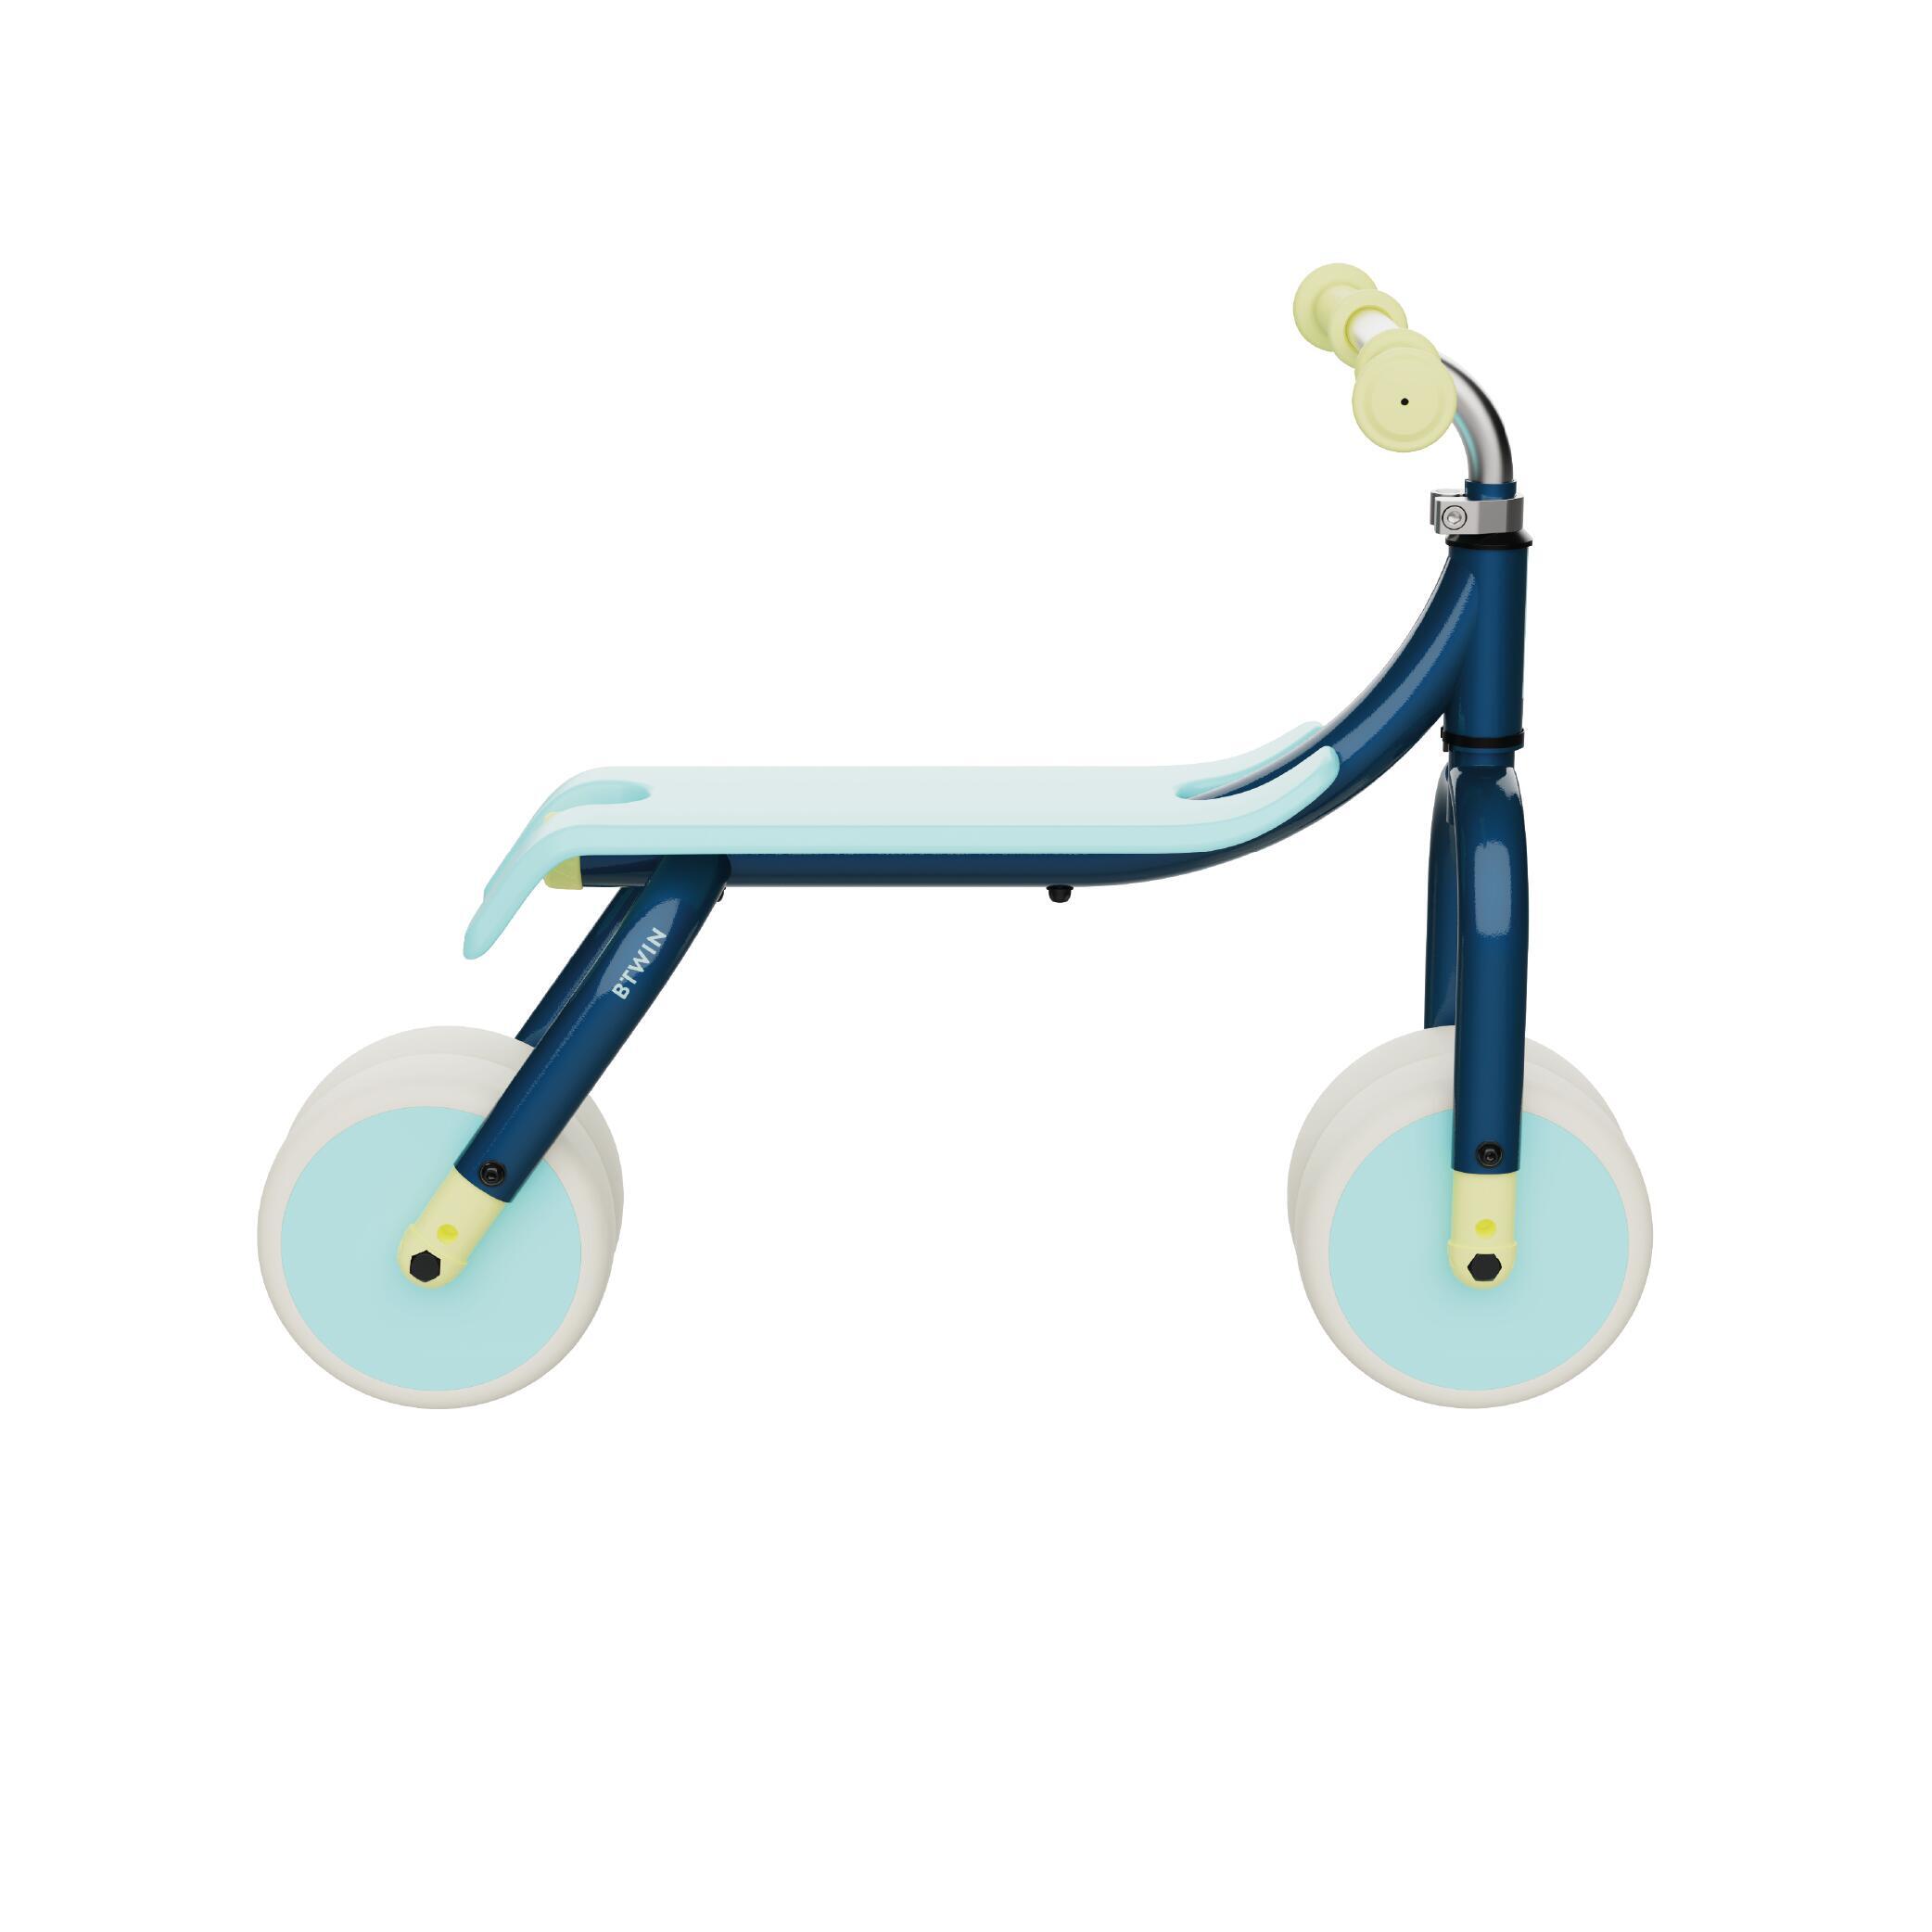 Convertible 2-in-1 Ride-On to Balance Bike - Blue/Cream 4/15